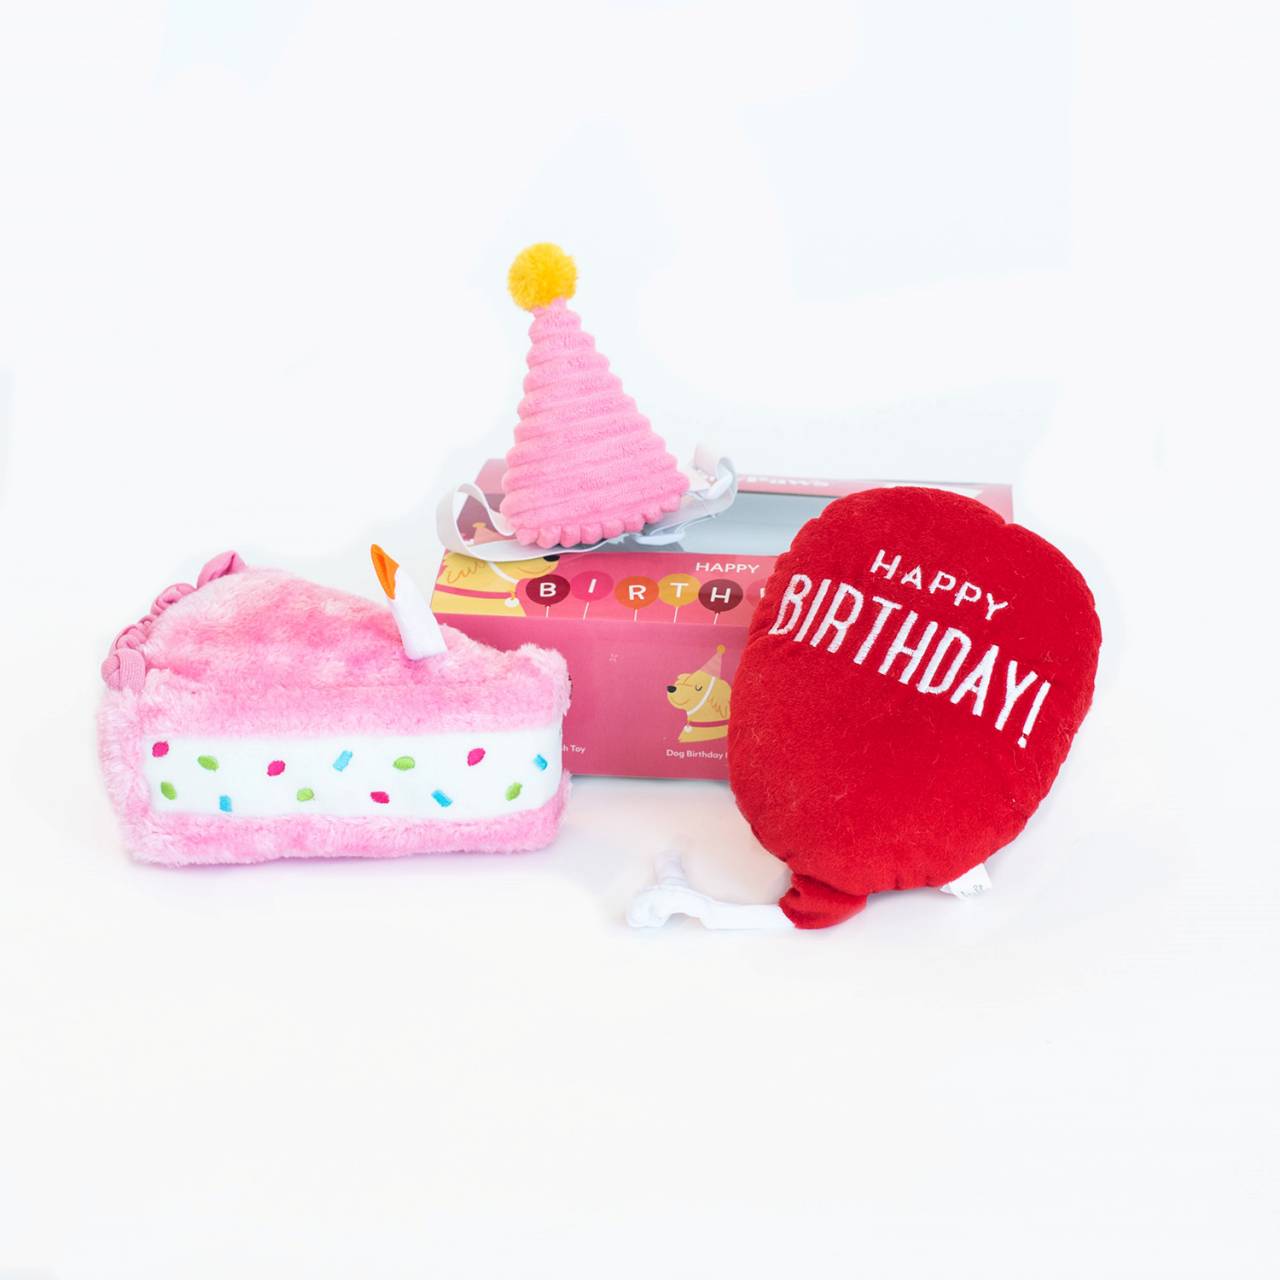 Zippy Paws Birthday Box Plush Squeaker Dog Toys - 3 Toys in Pink